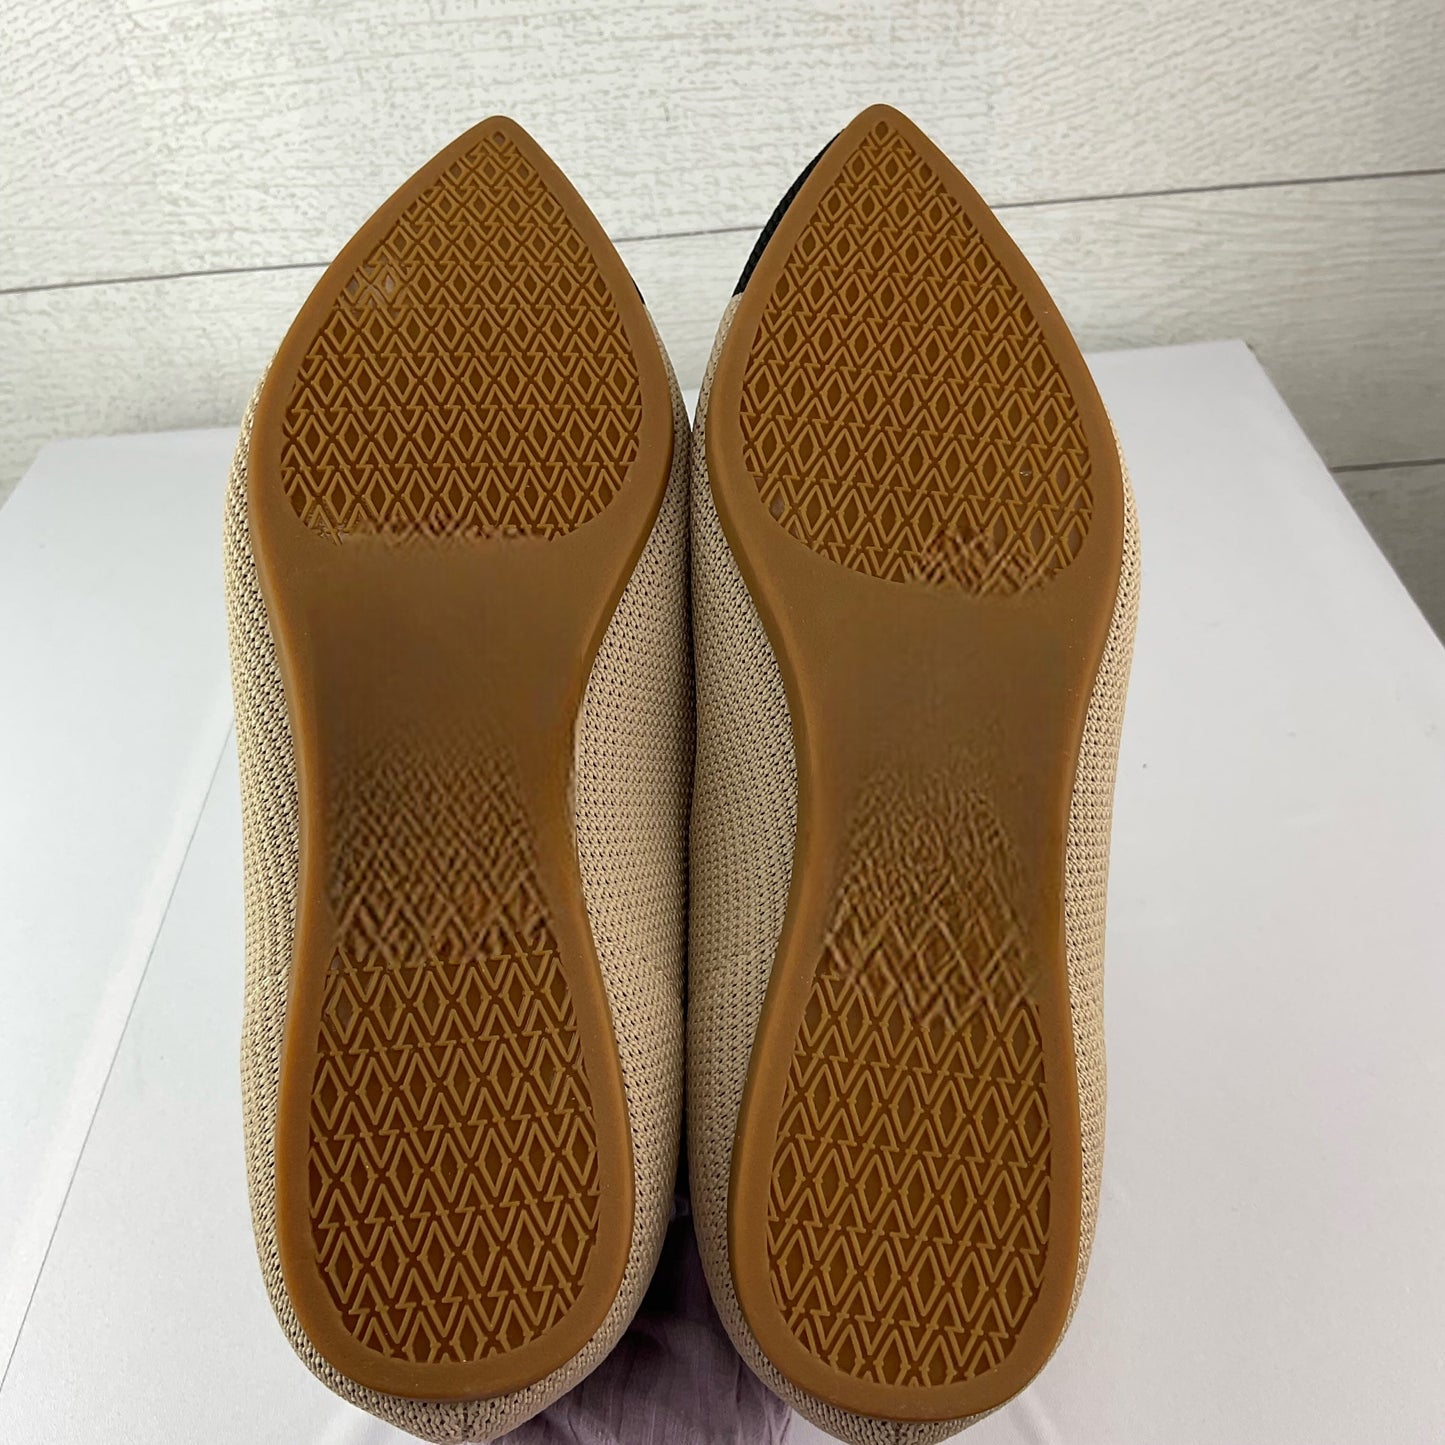 Tan Shoes Flats Clothes Mentor, Size 5.5